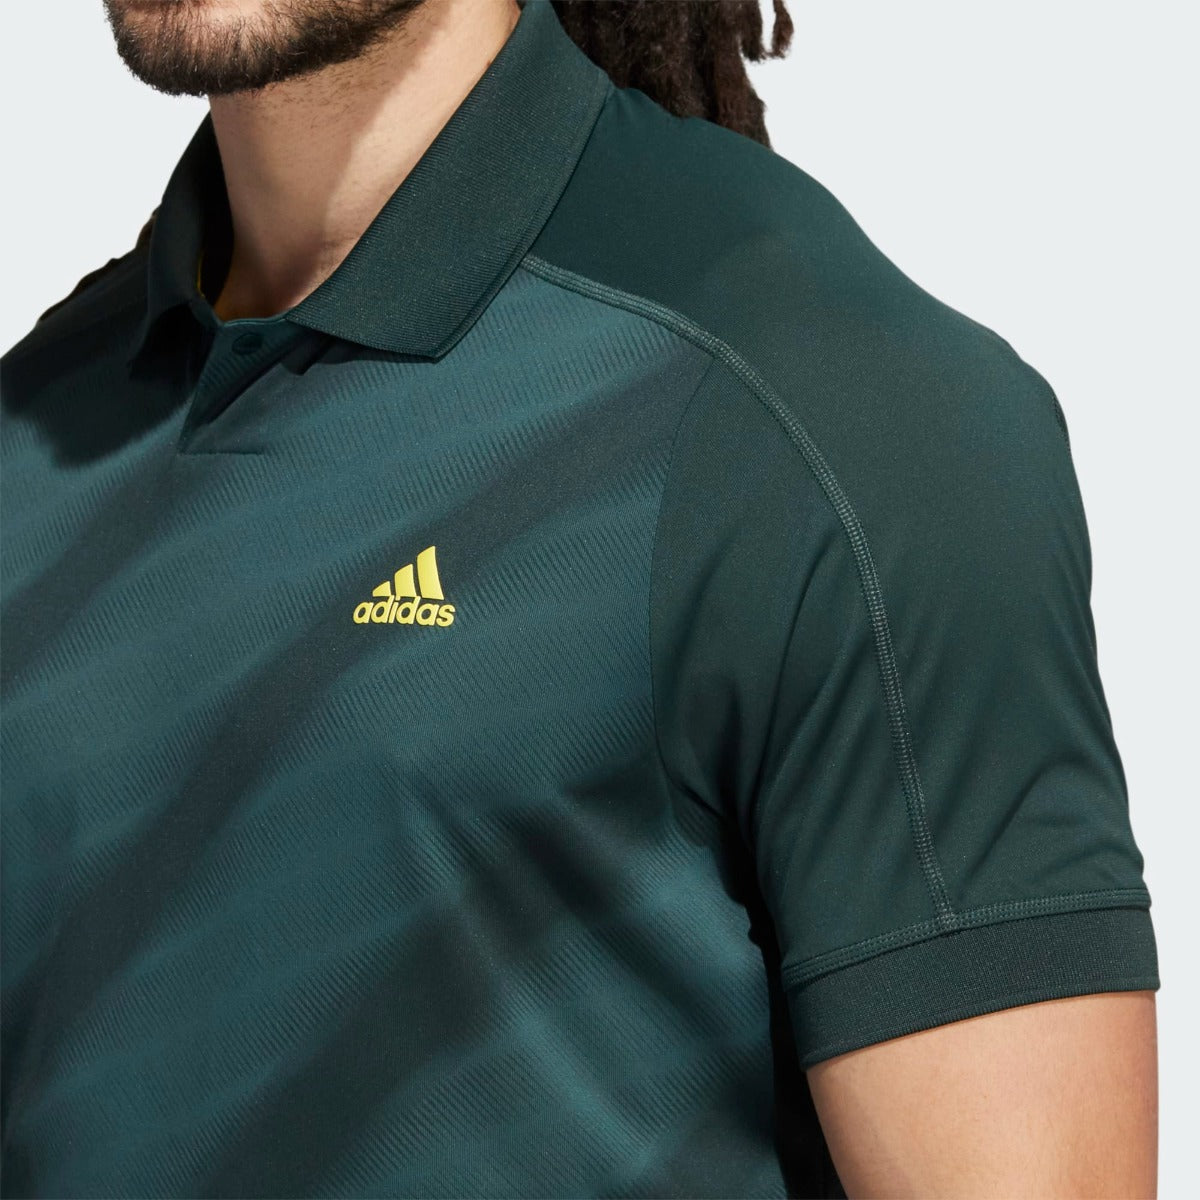 Adidas Statement Polo Shirt Men’s (Green)
